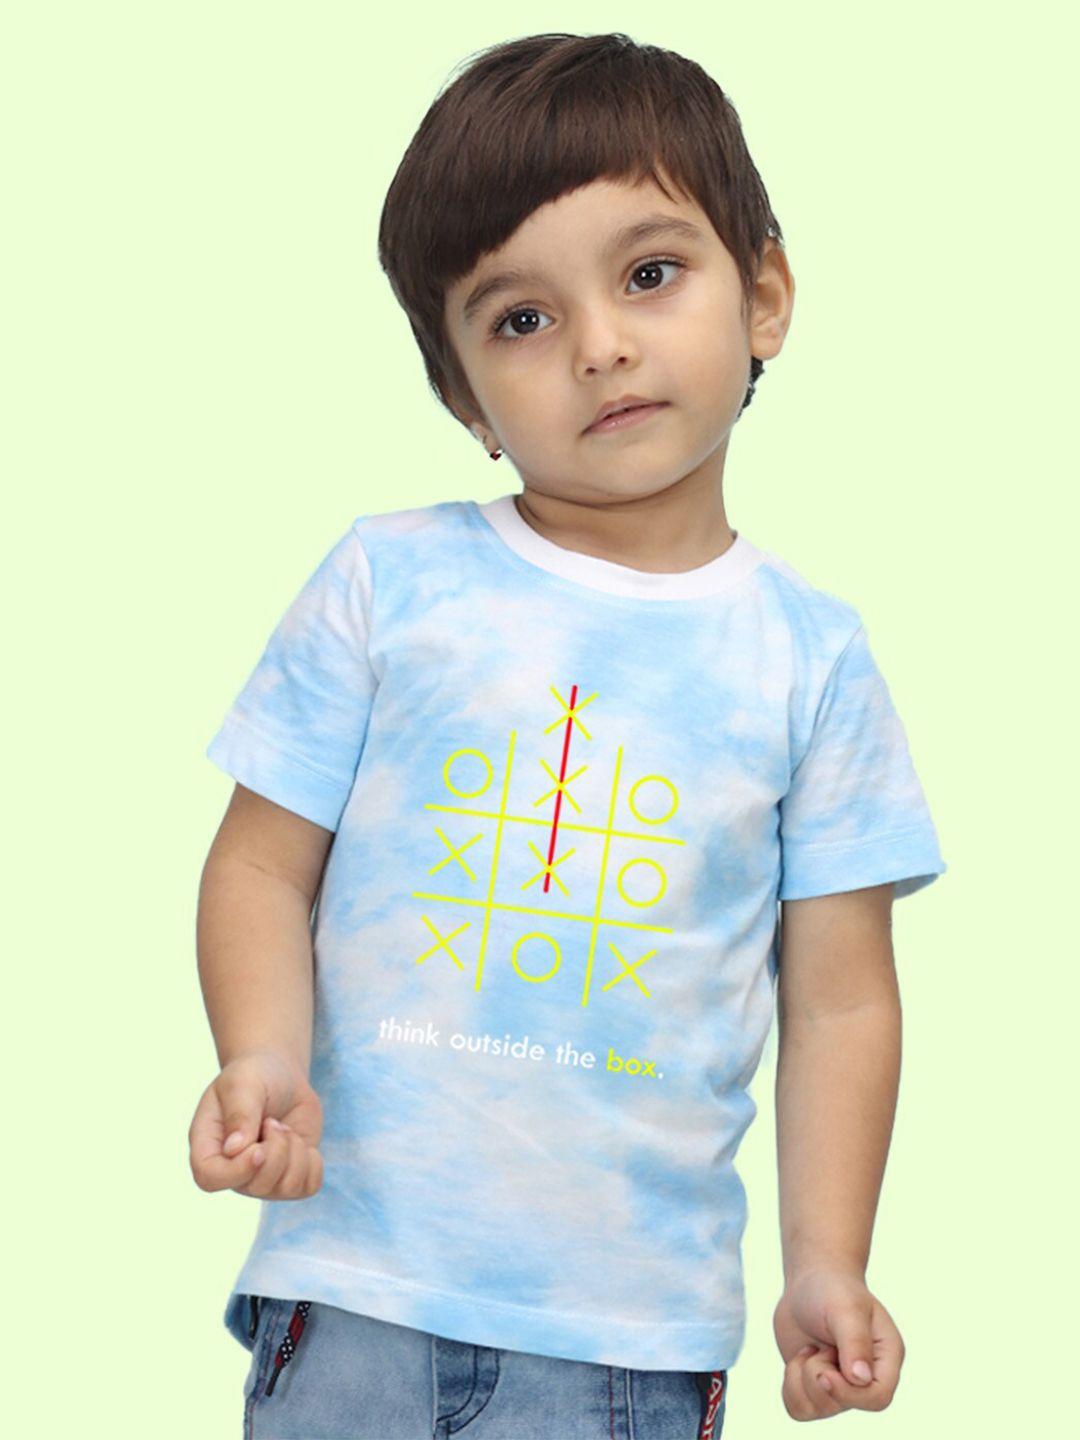 nusyl-kids-printed-t-shirt